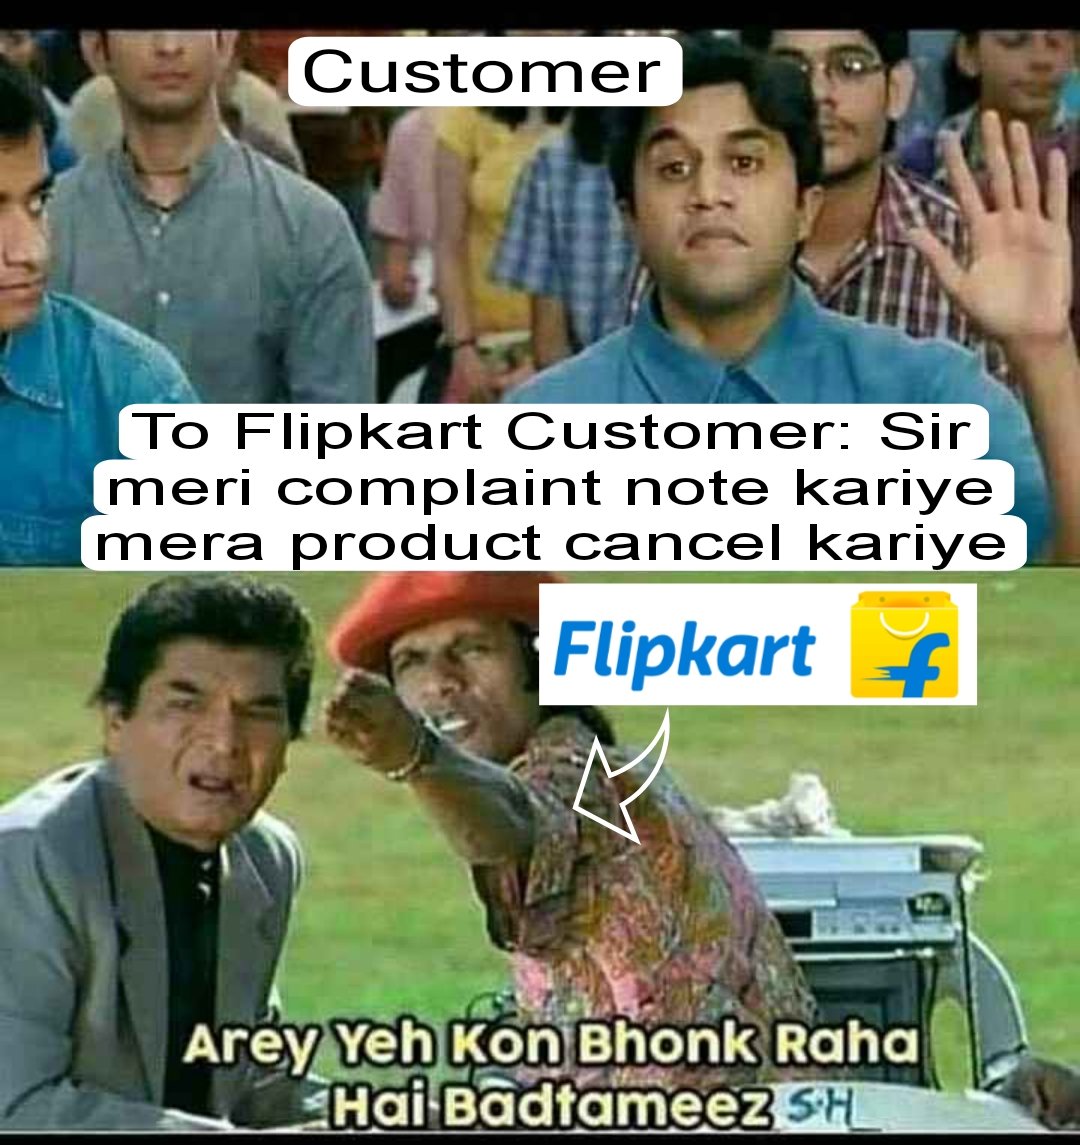 Be careful Flipkart apni statement ko kabhi bhi Flip kar sakta hai 
@flipkart 
#Flipkart #trending #onlineshopping  #CustomerSatisfaction #flipkartfraud #CustomerService #CustomerService #indianshoppingfraud #amazon #flipkartmeme #onlineshoppingfraud